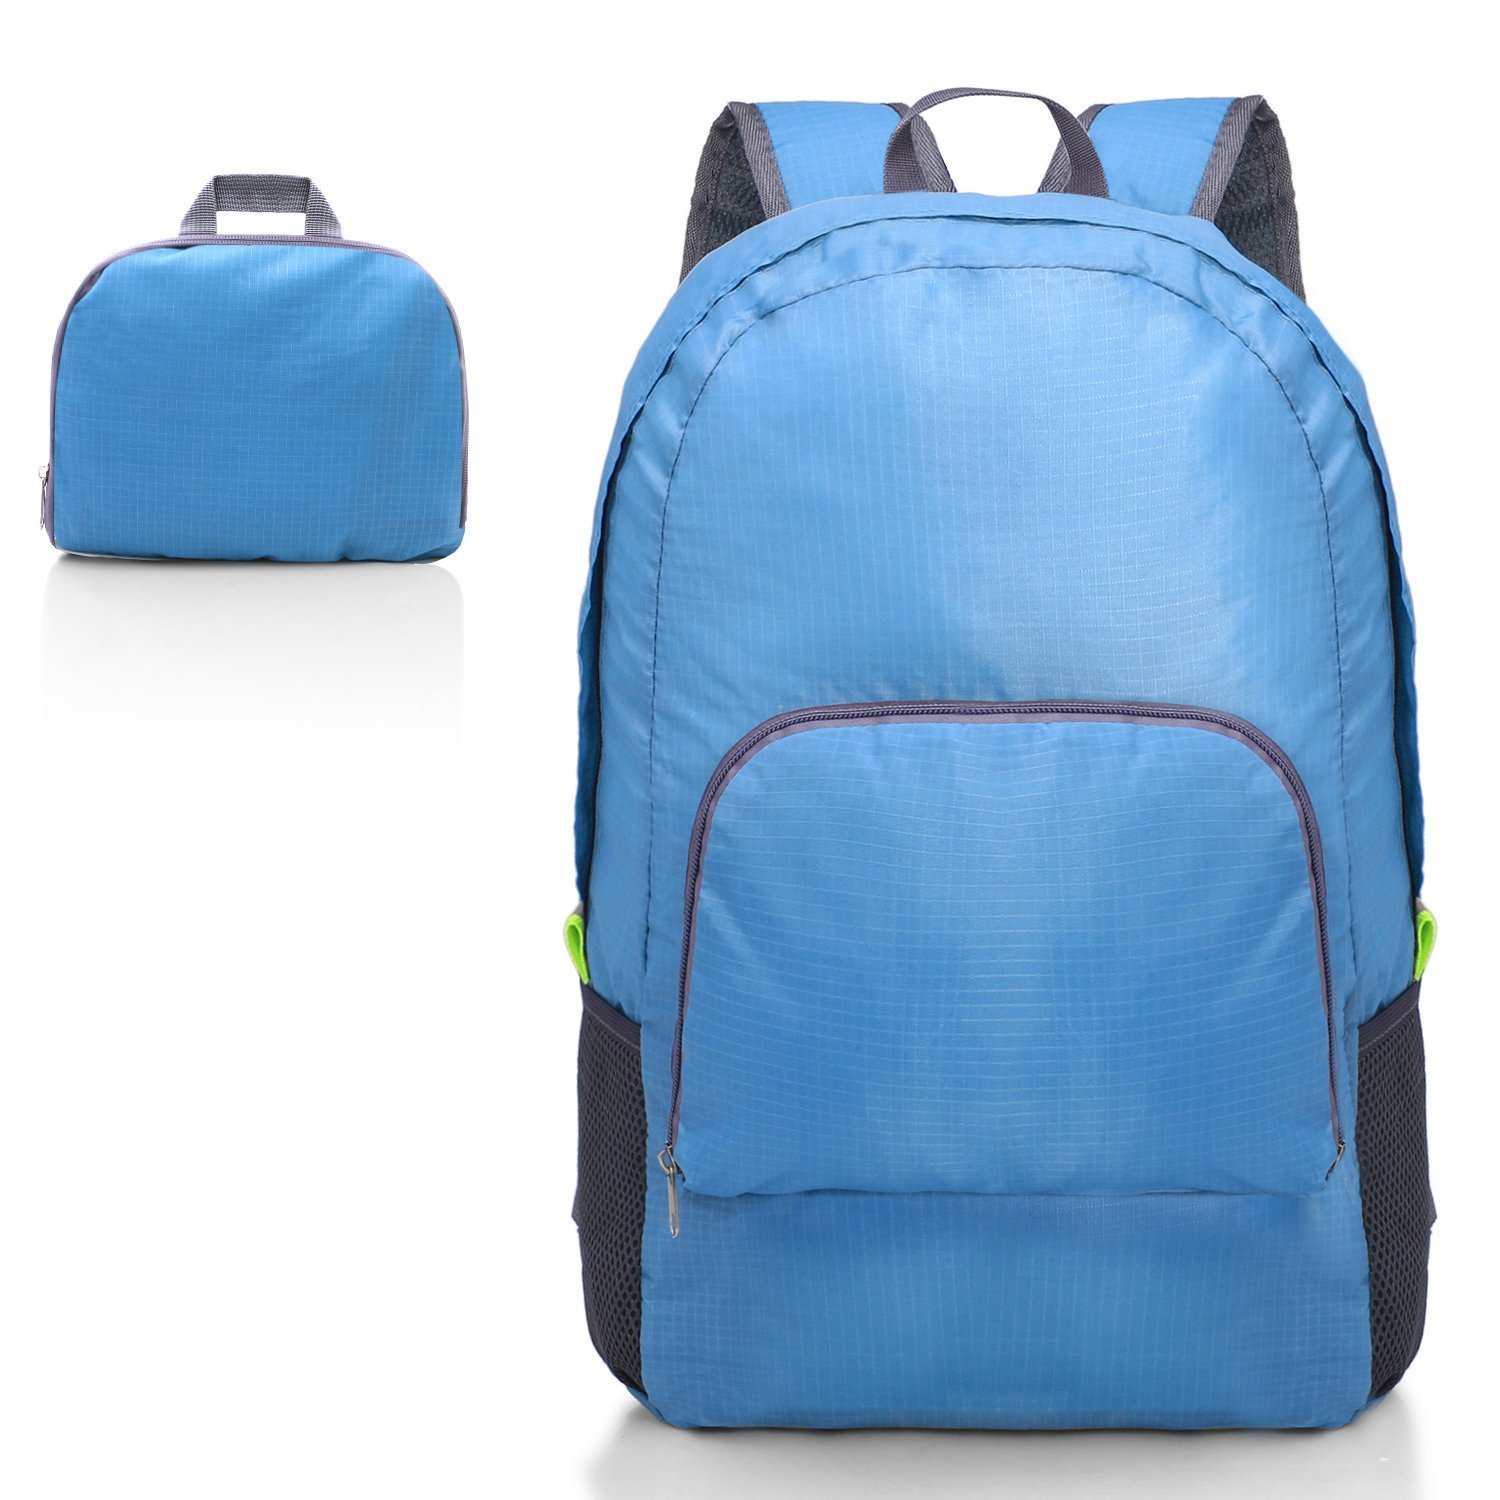 Super lightweight Foldable Daypack